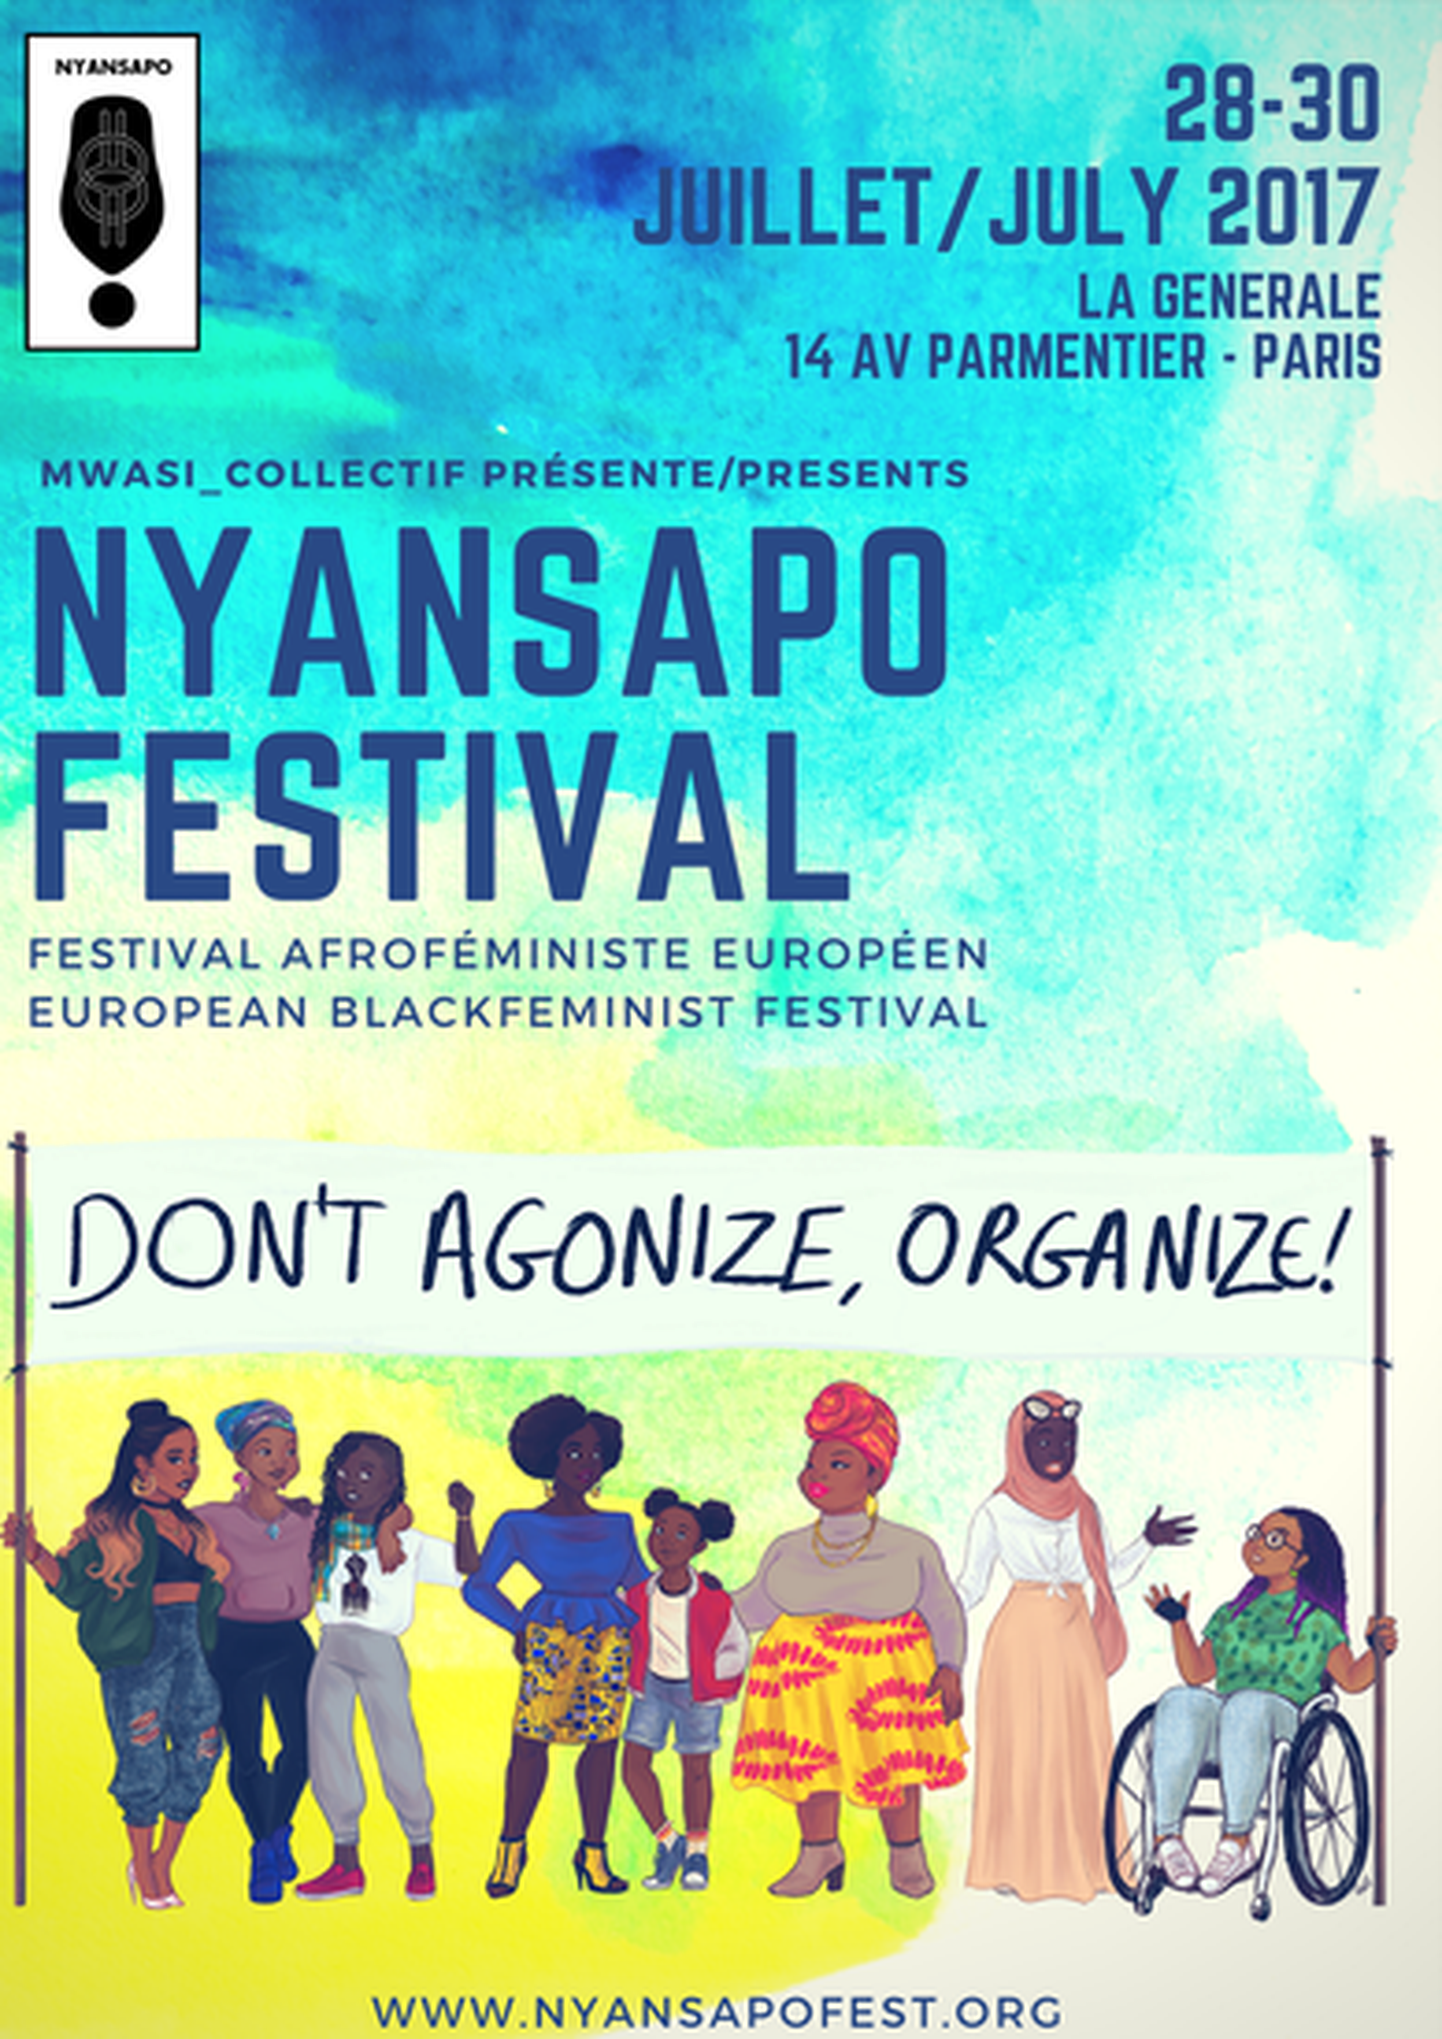 Nyansapo festivali poster